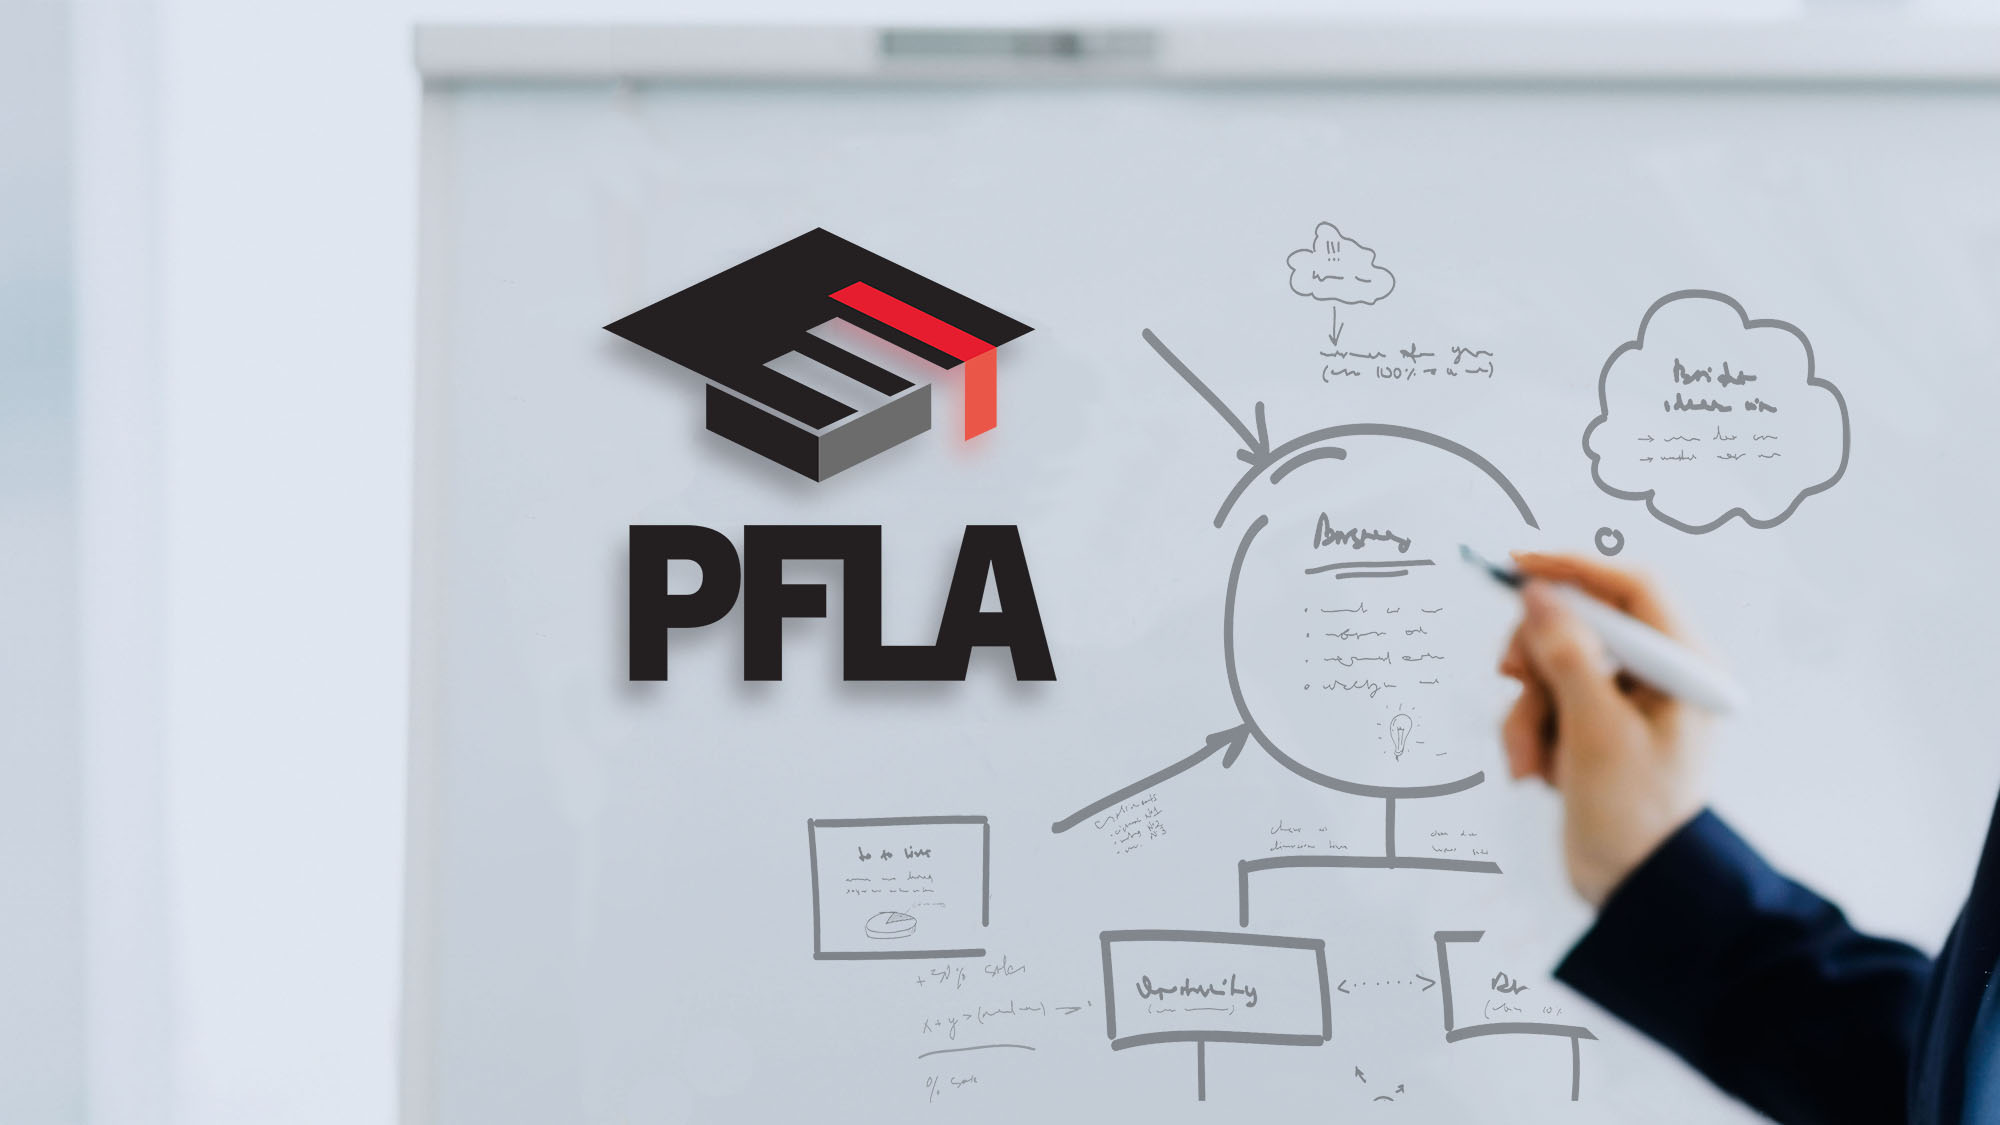 PFLA logo on presentation board with financial drawings